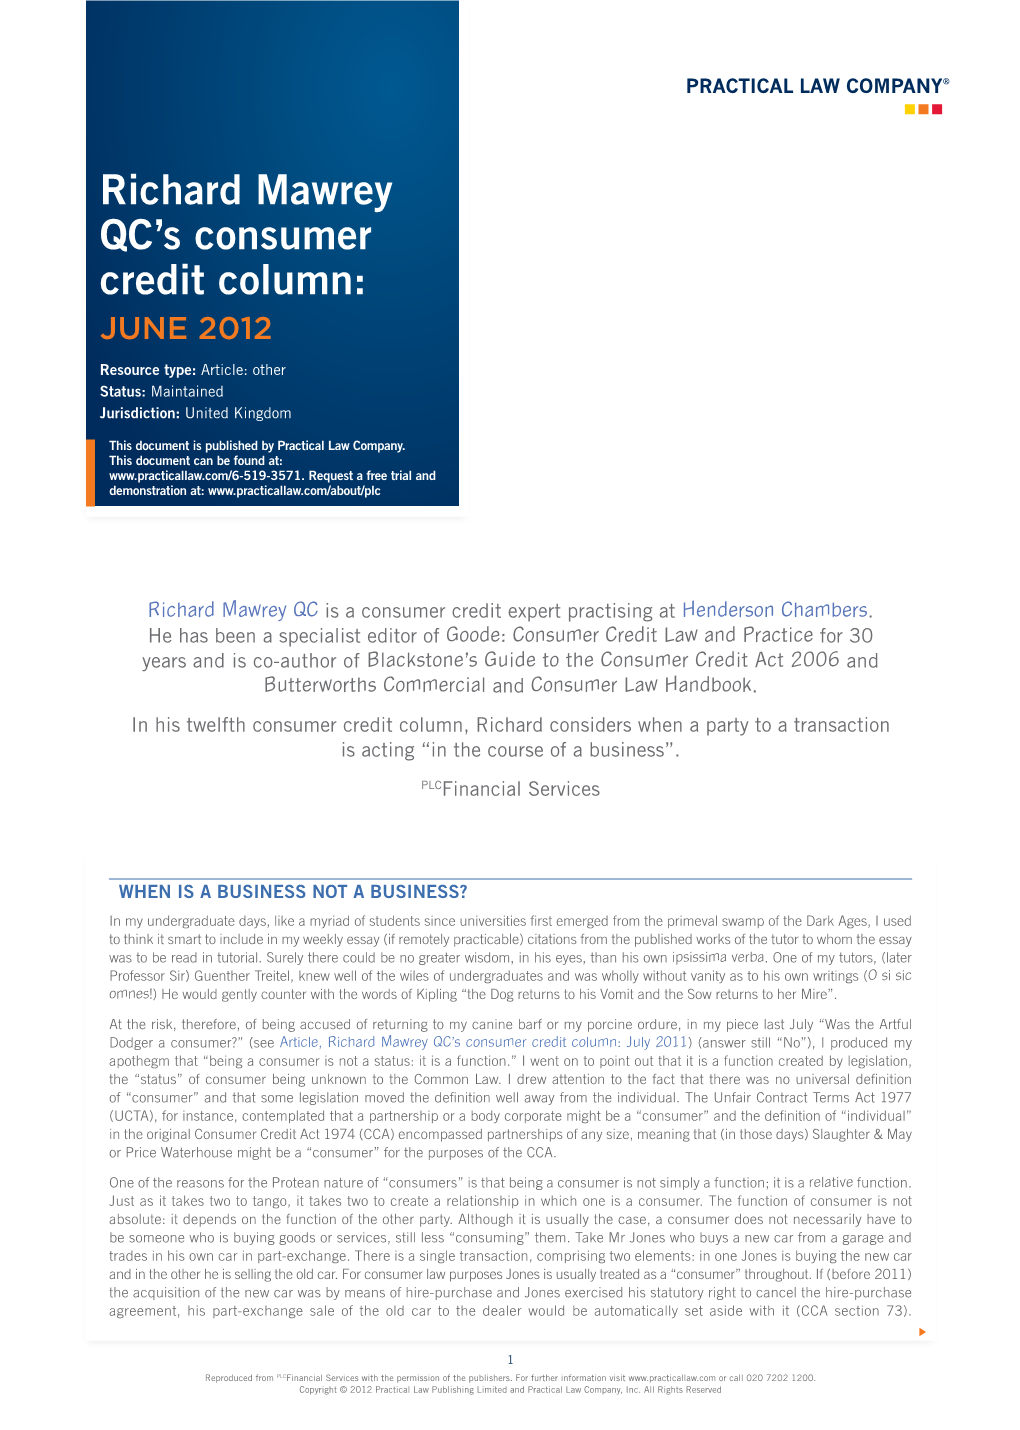 Richard Mawrey QC's Consumer Credit Column